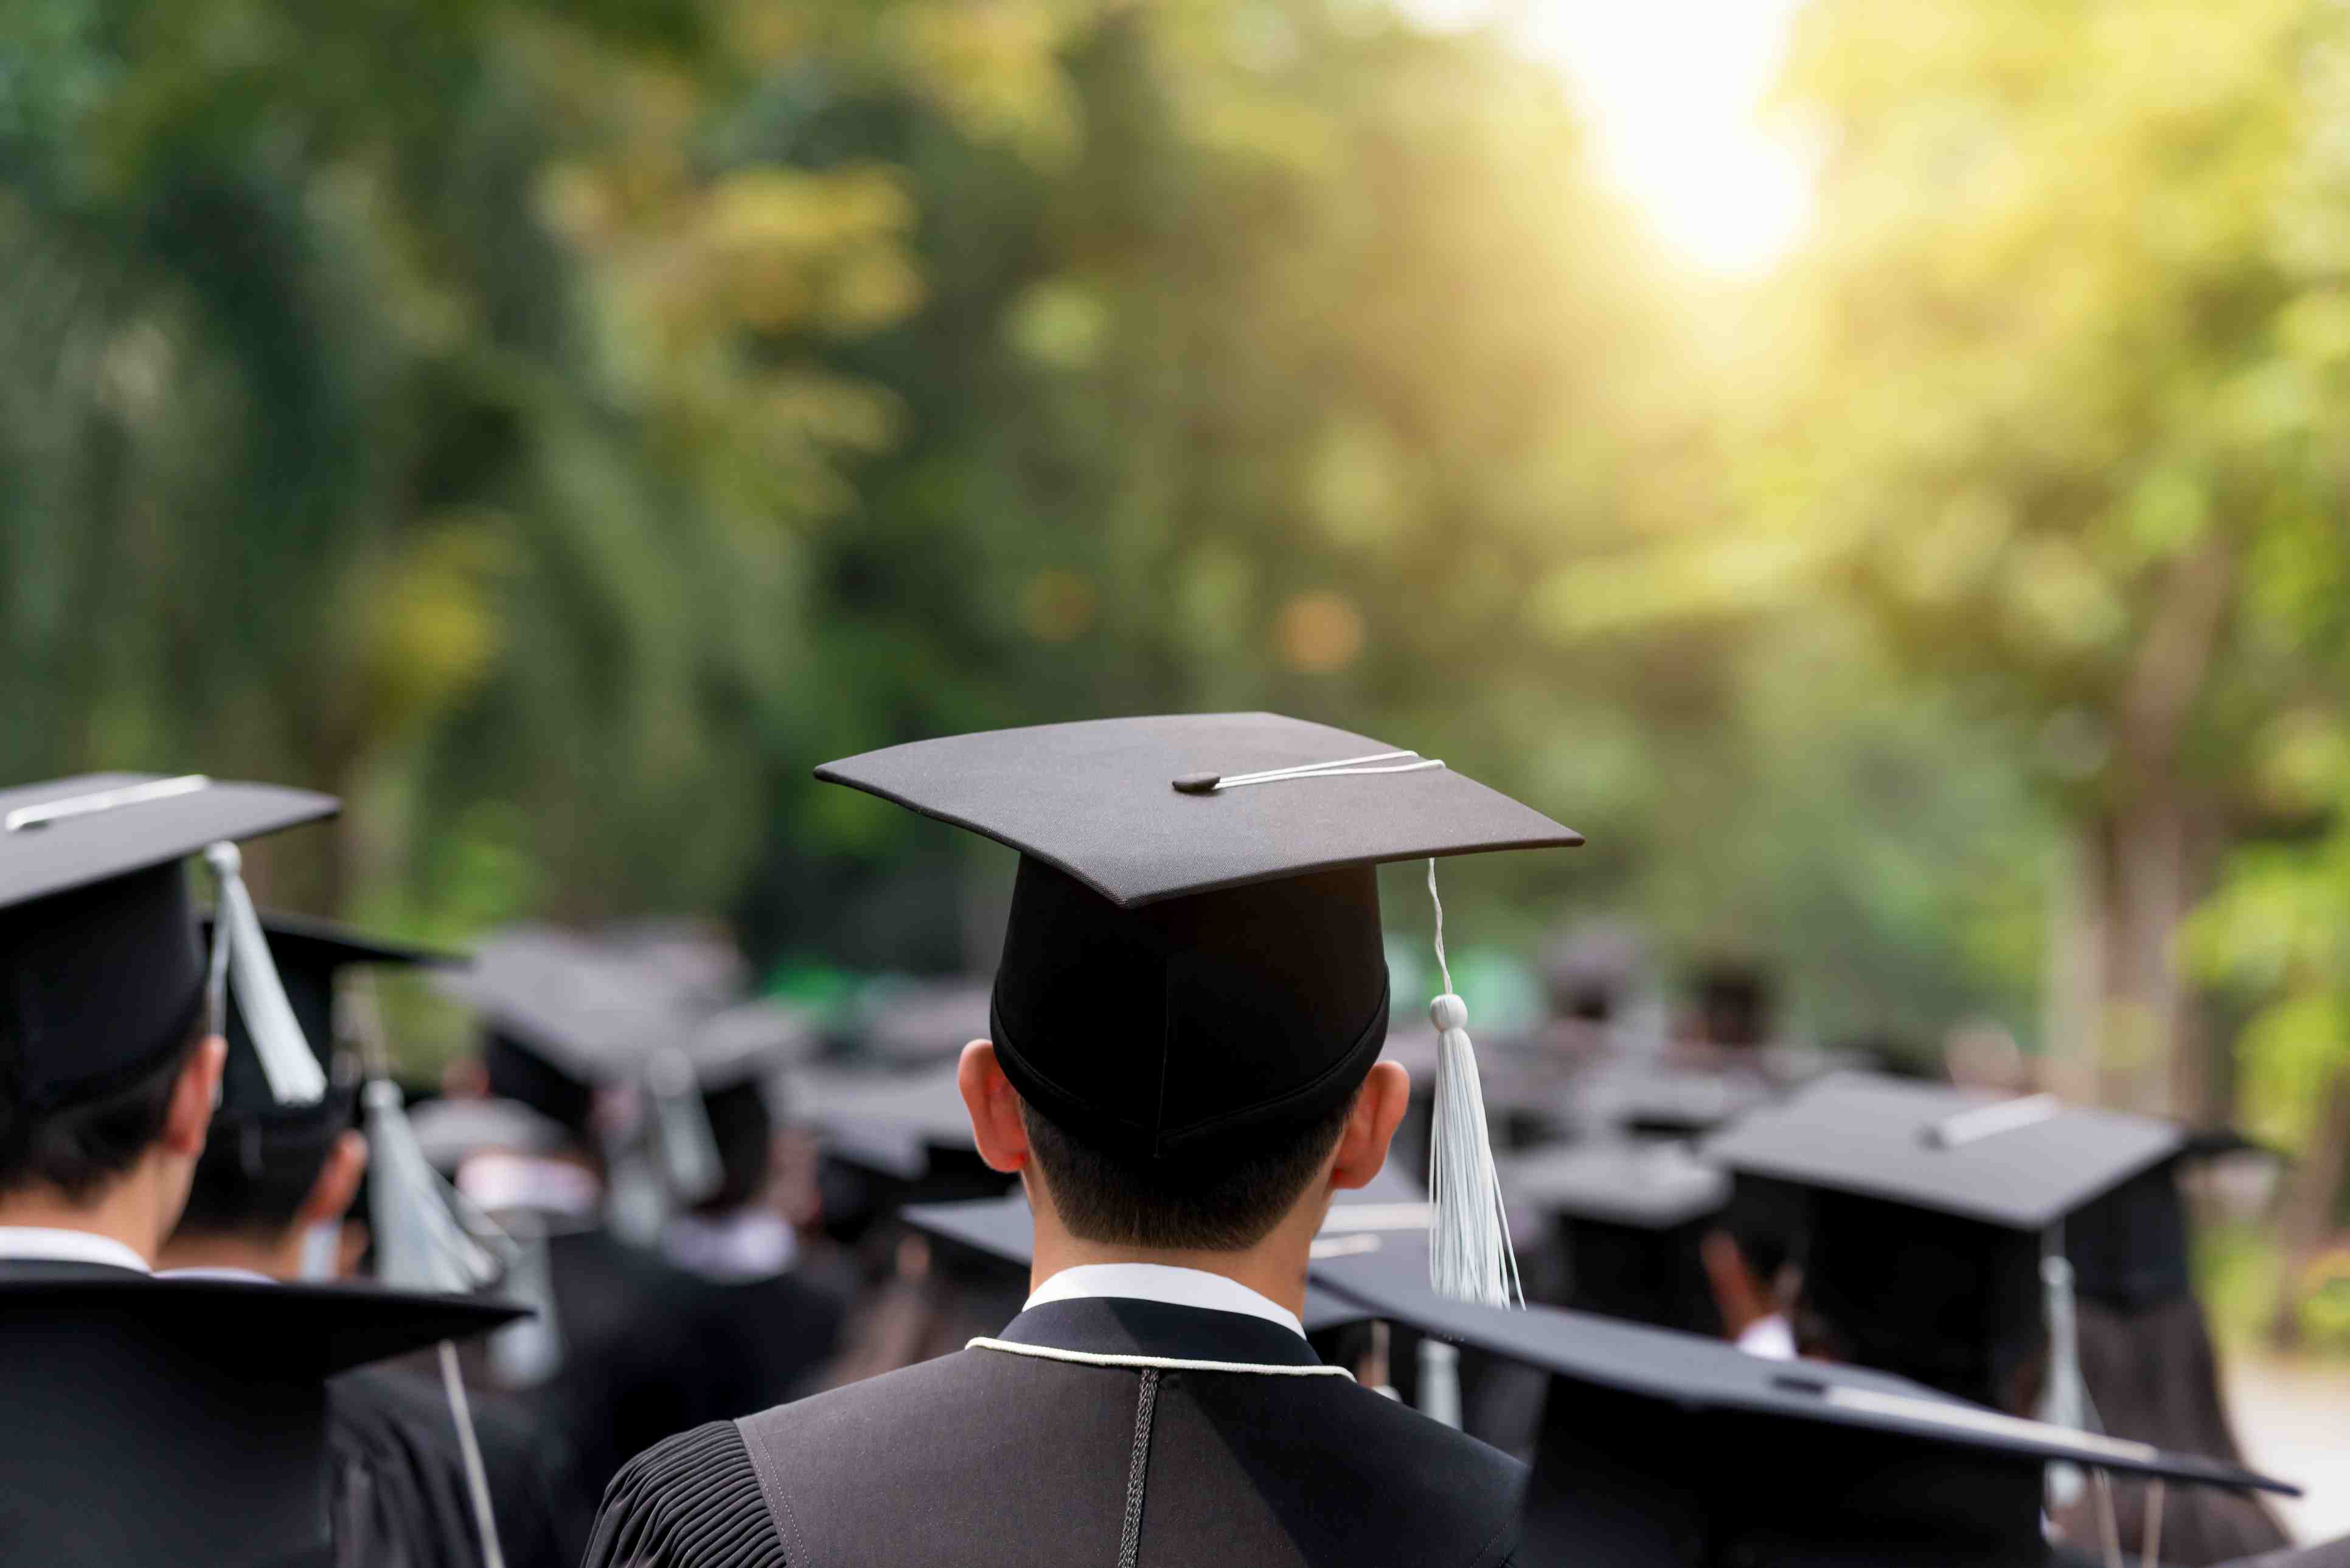 back-of-graduates-during-commencement-at-university--close-up-at-graduate-cap-855832316-5a99dada18ba0100375a44ef.jpg